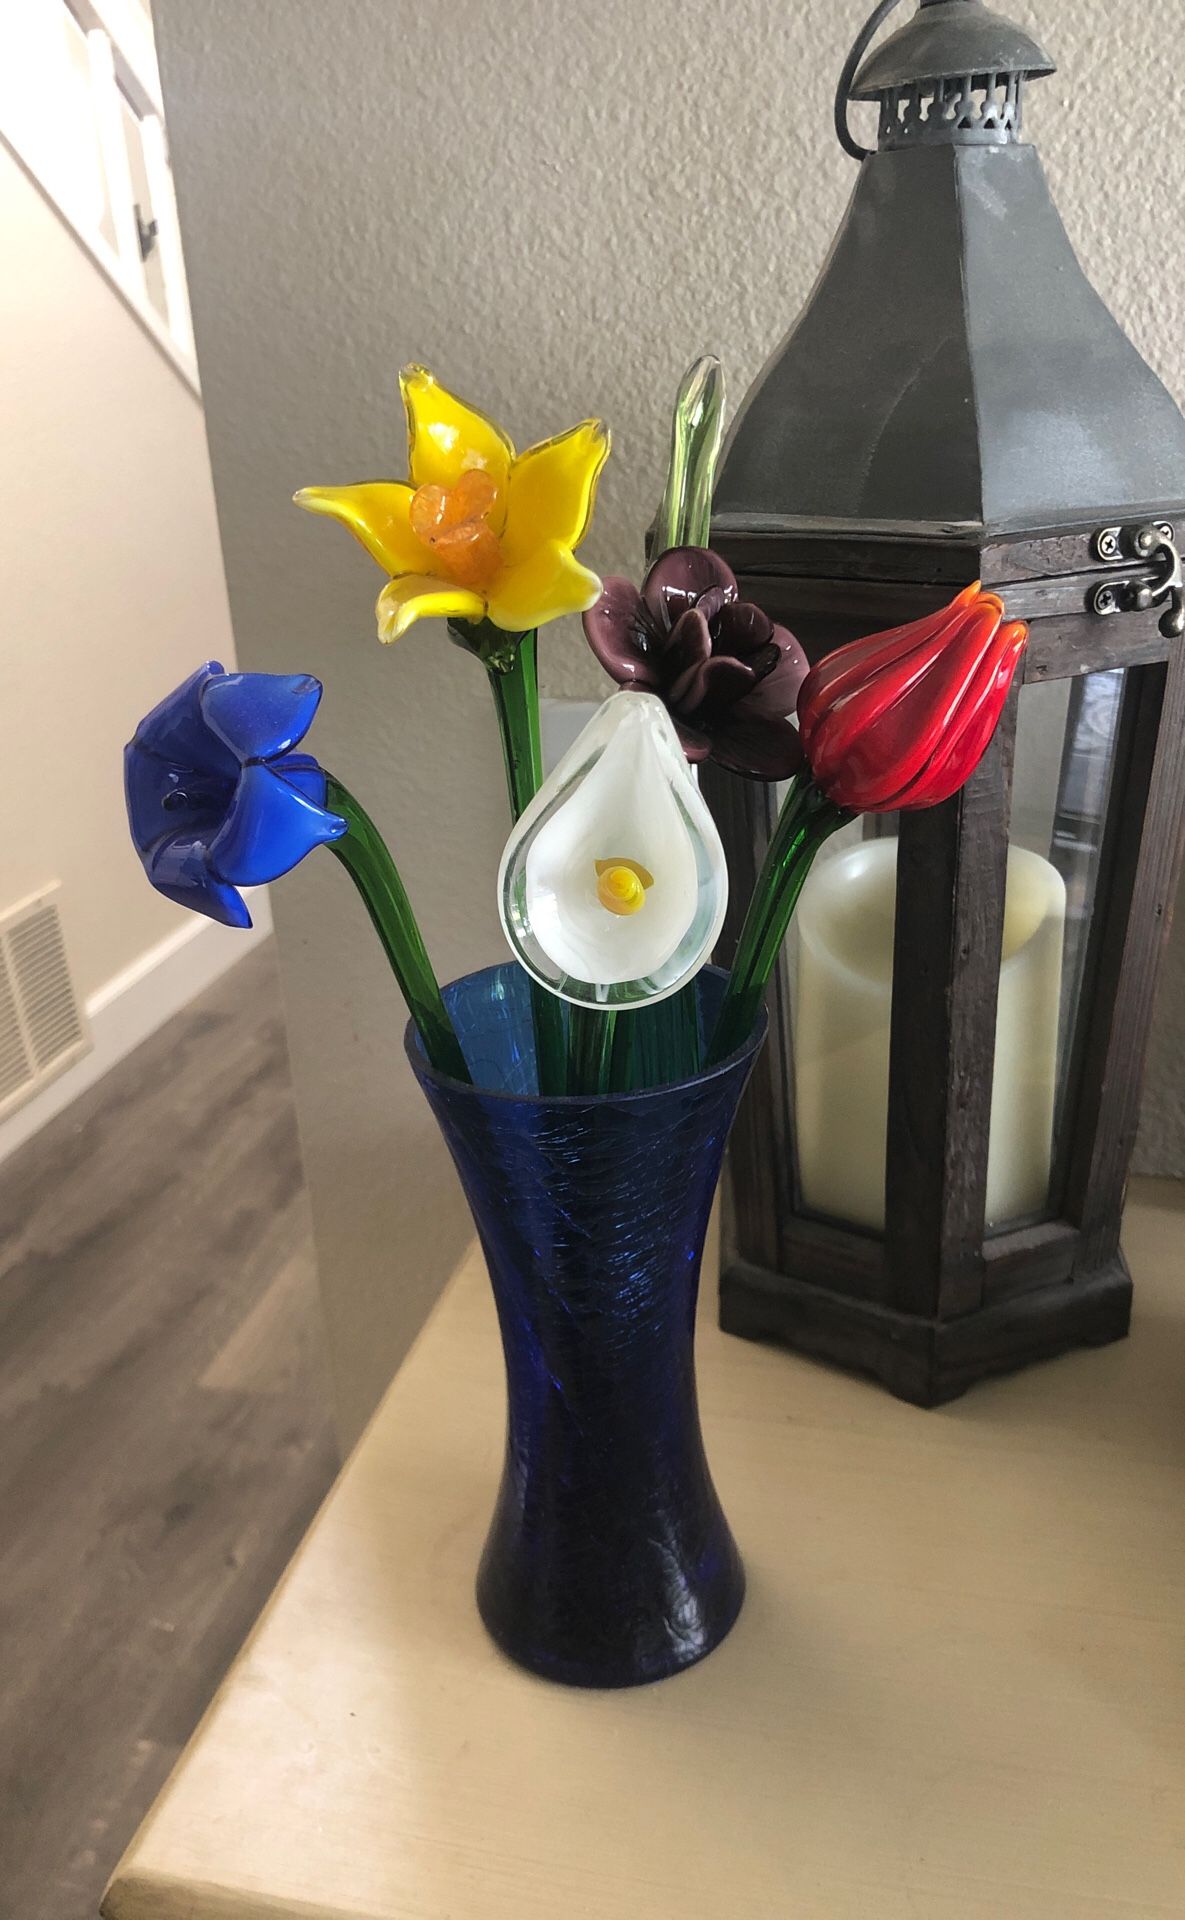 Handblown glass flowers